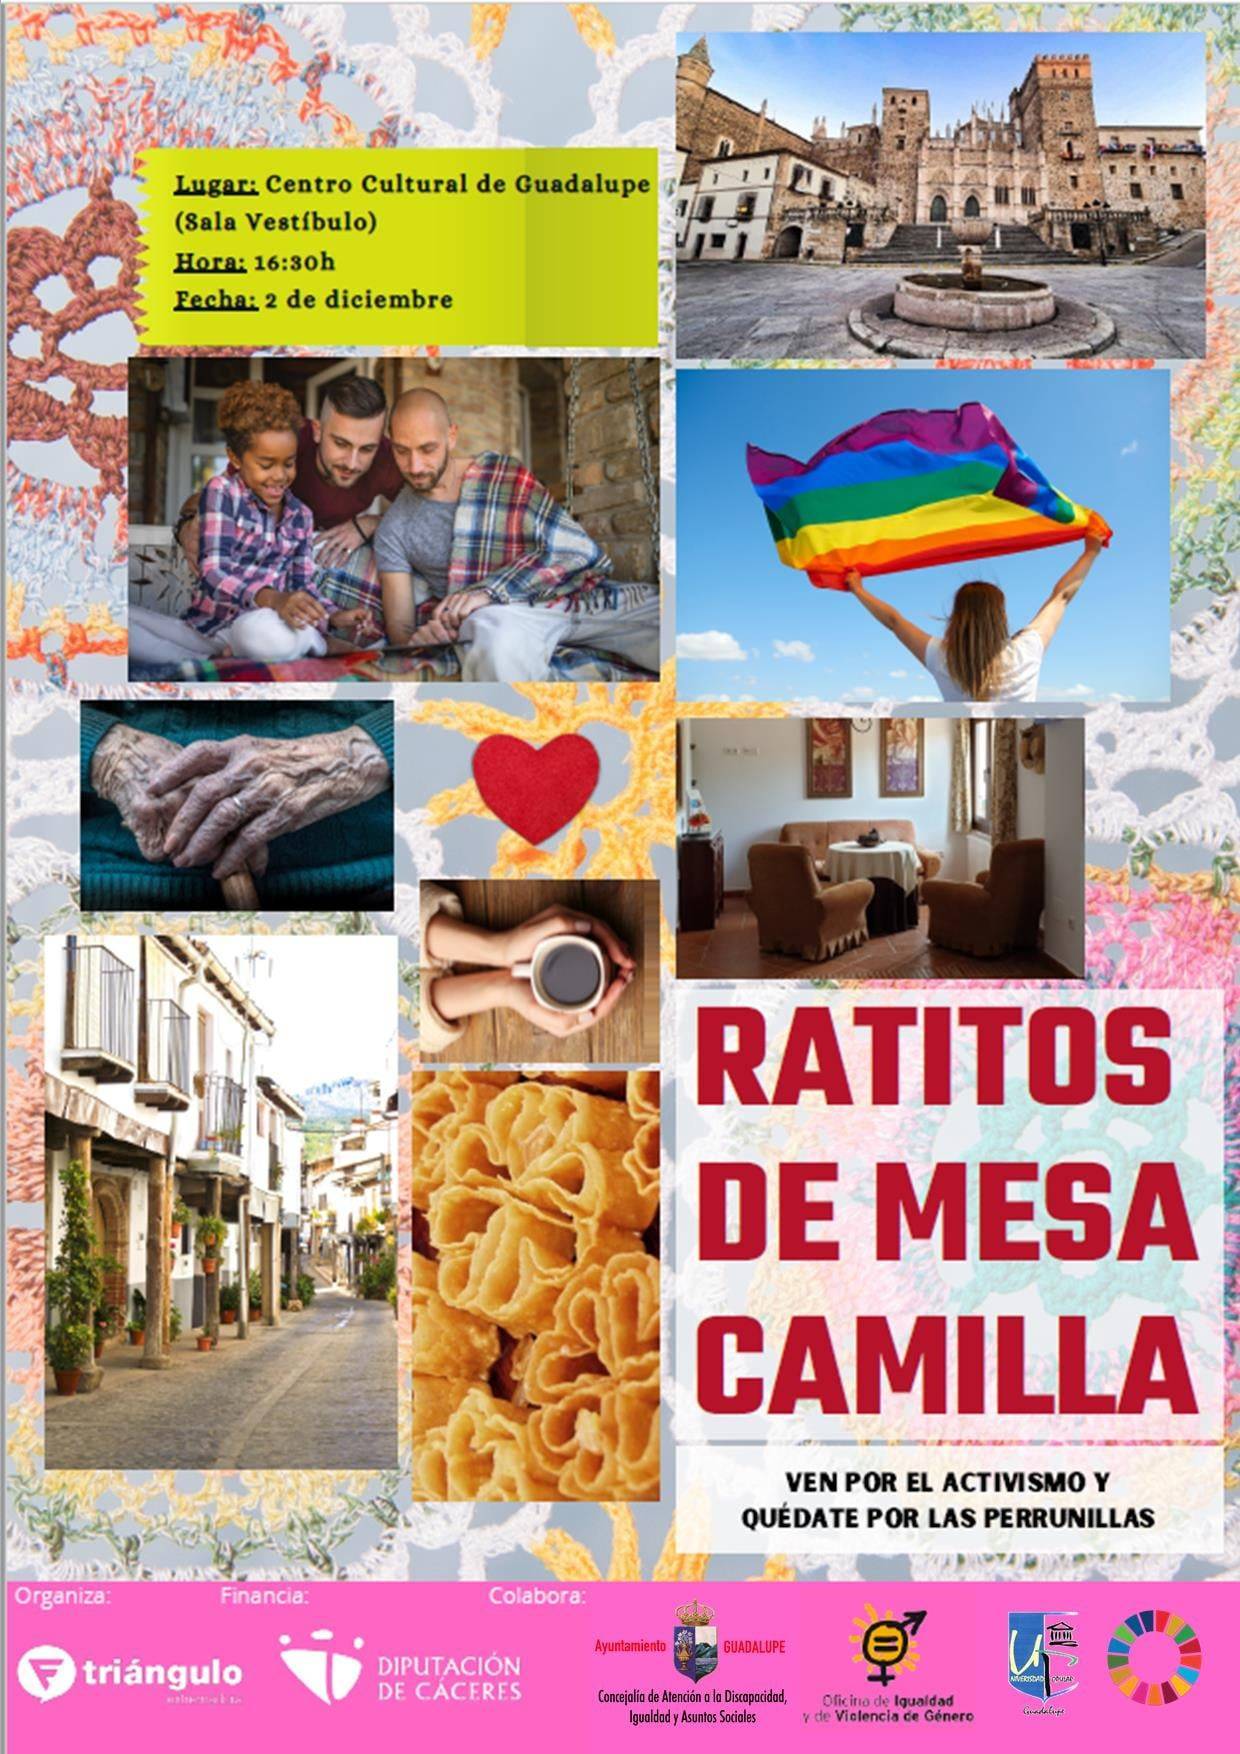 Ratitos de mesa camilla (2021) - Guadalupe (Cáceres) 1